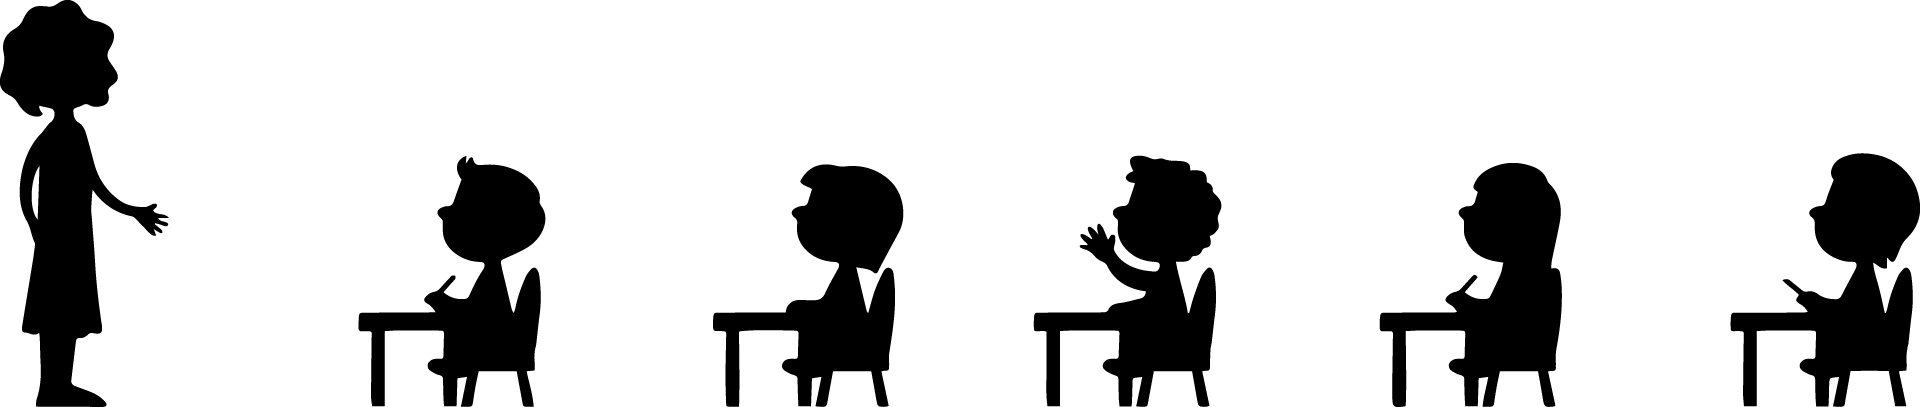 Classroom Silhouette